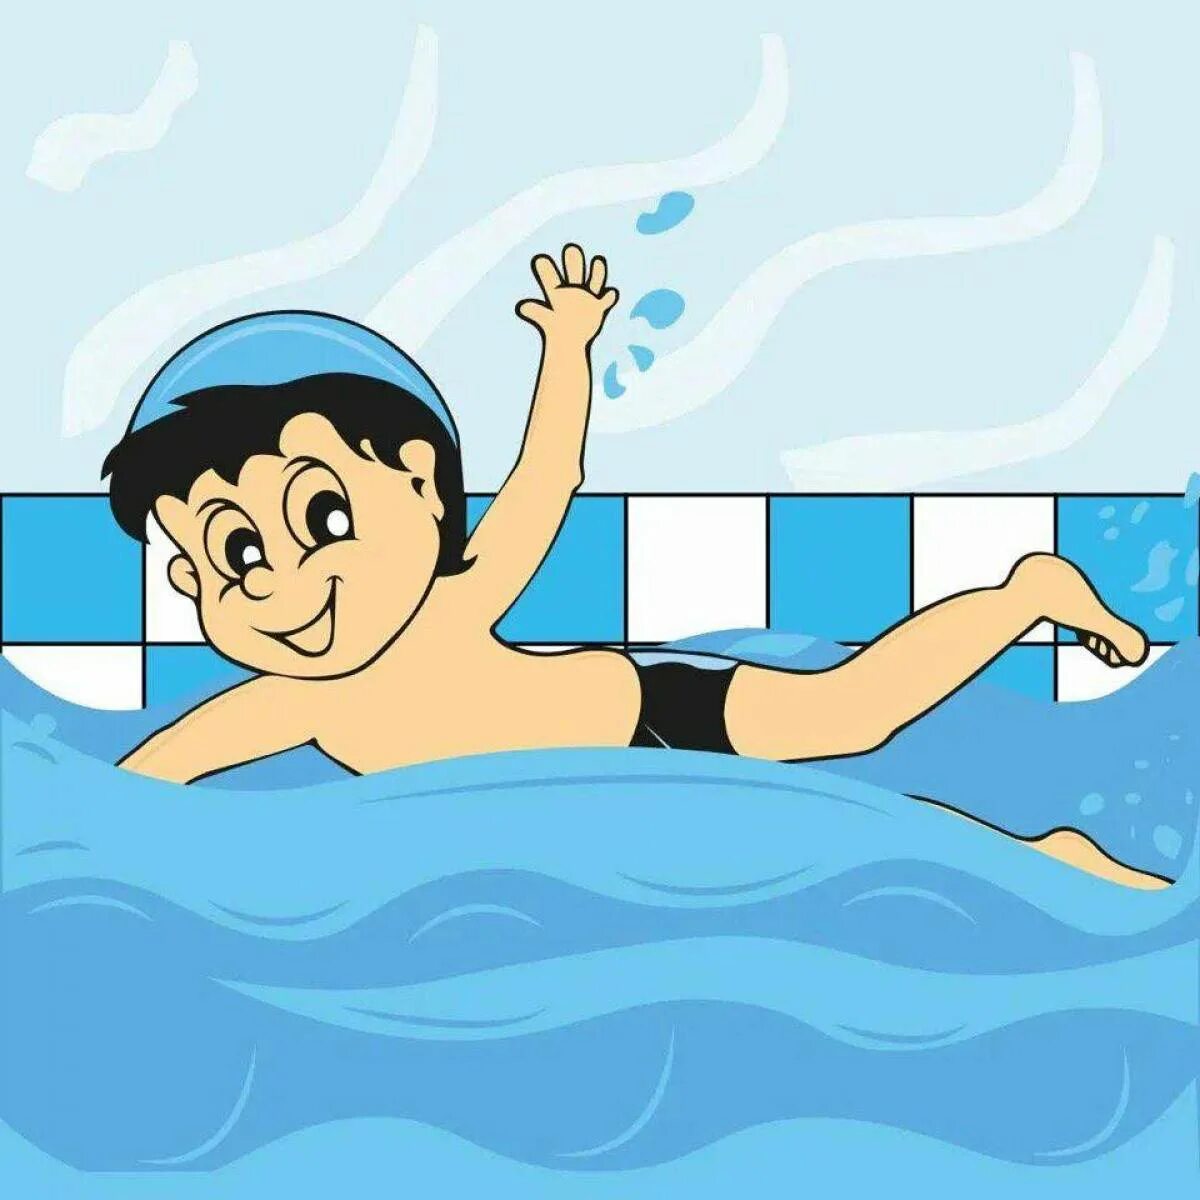 He will swim. Мальчик плавает. Мальчик плавает в бассейне. Дети плавают. Мальчик плывет в бассейне.